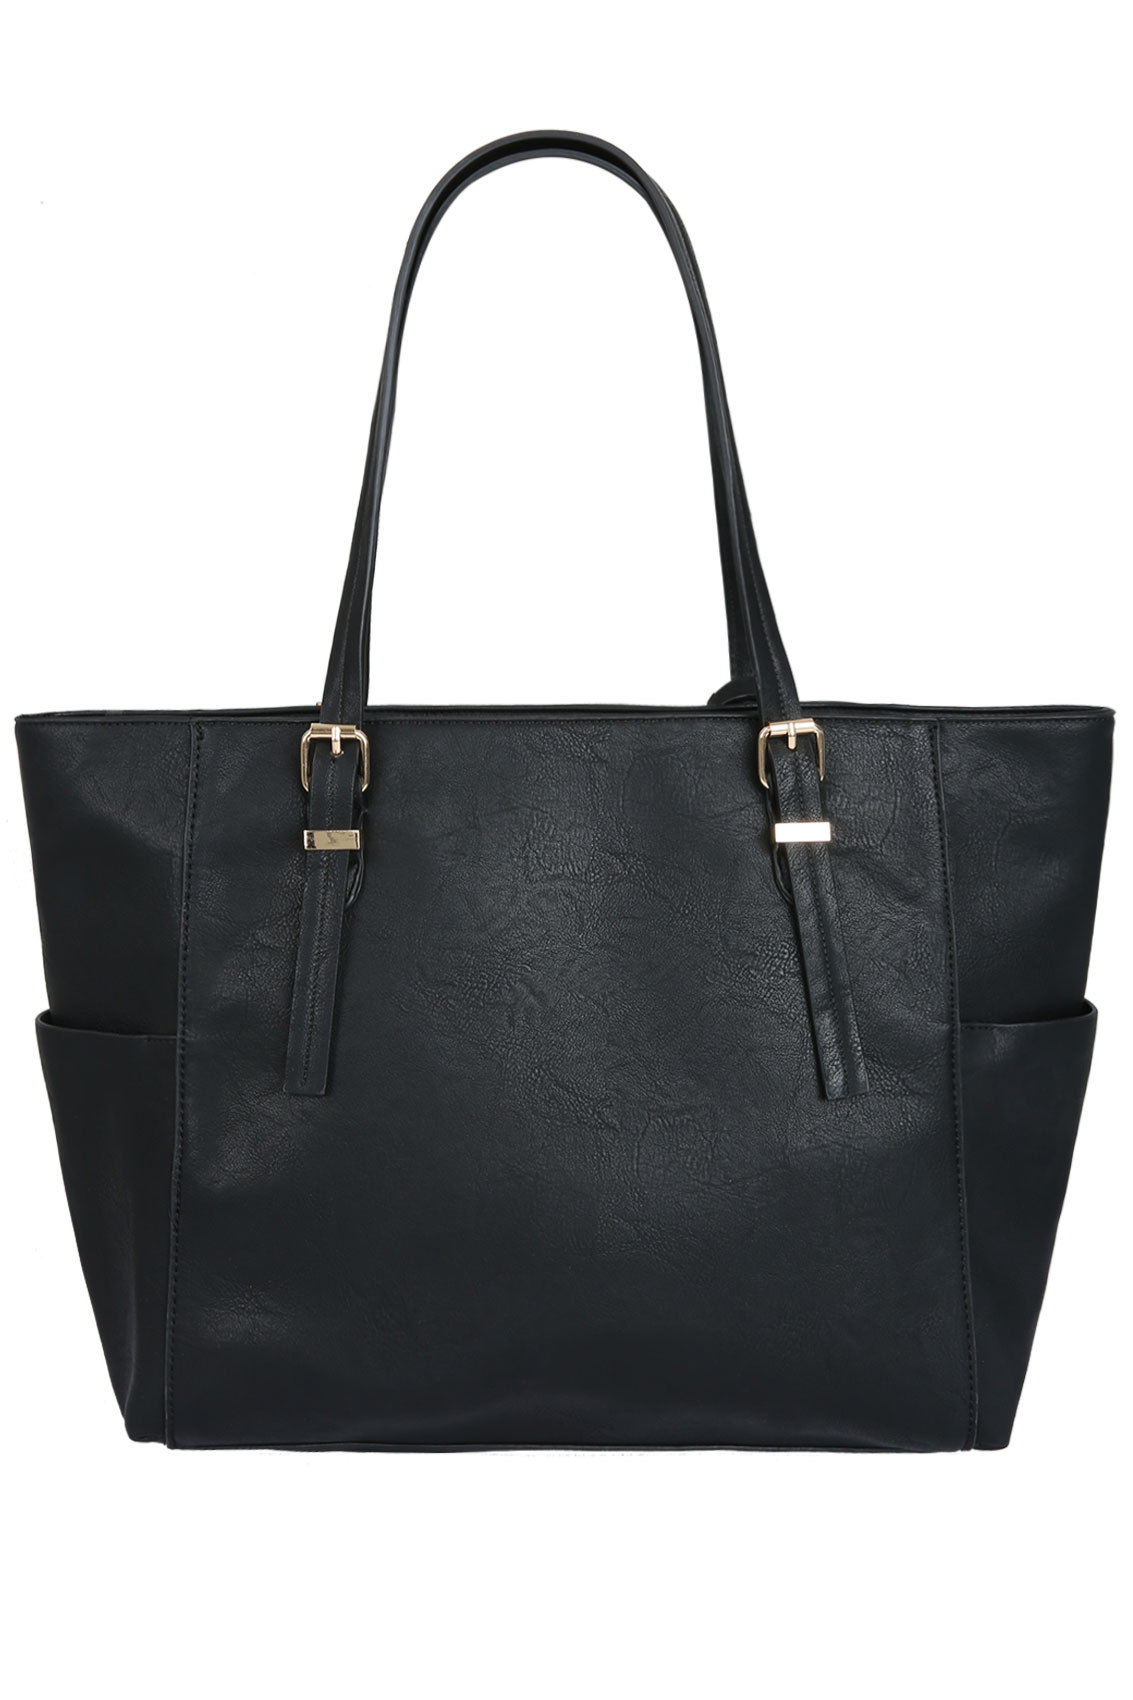 Black Oversized Tote Bag With Gold Stud & Tassel Detail